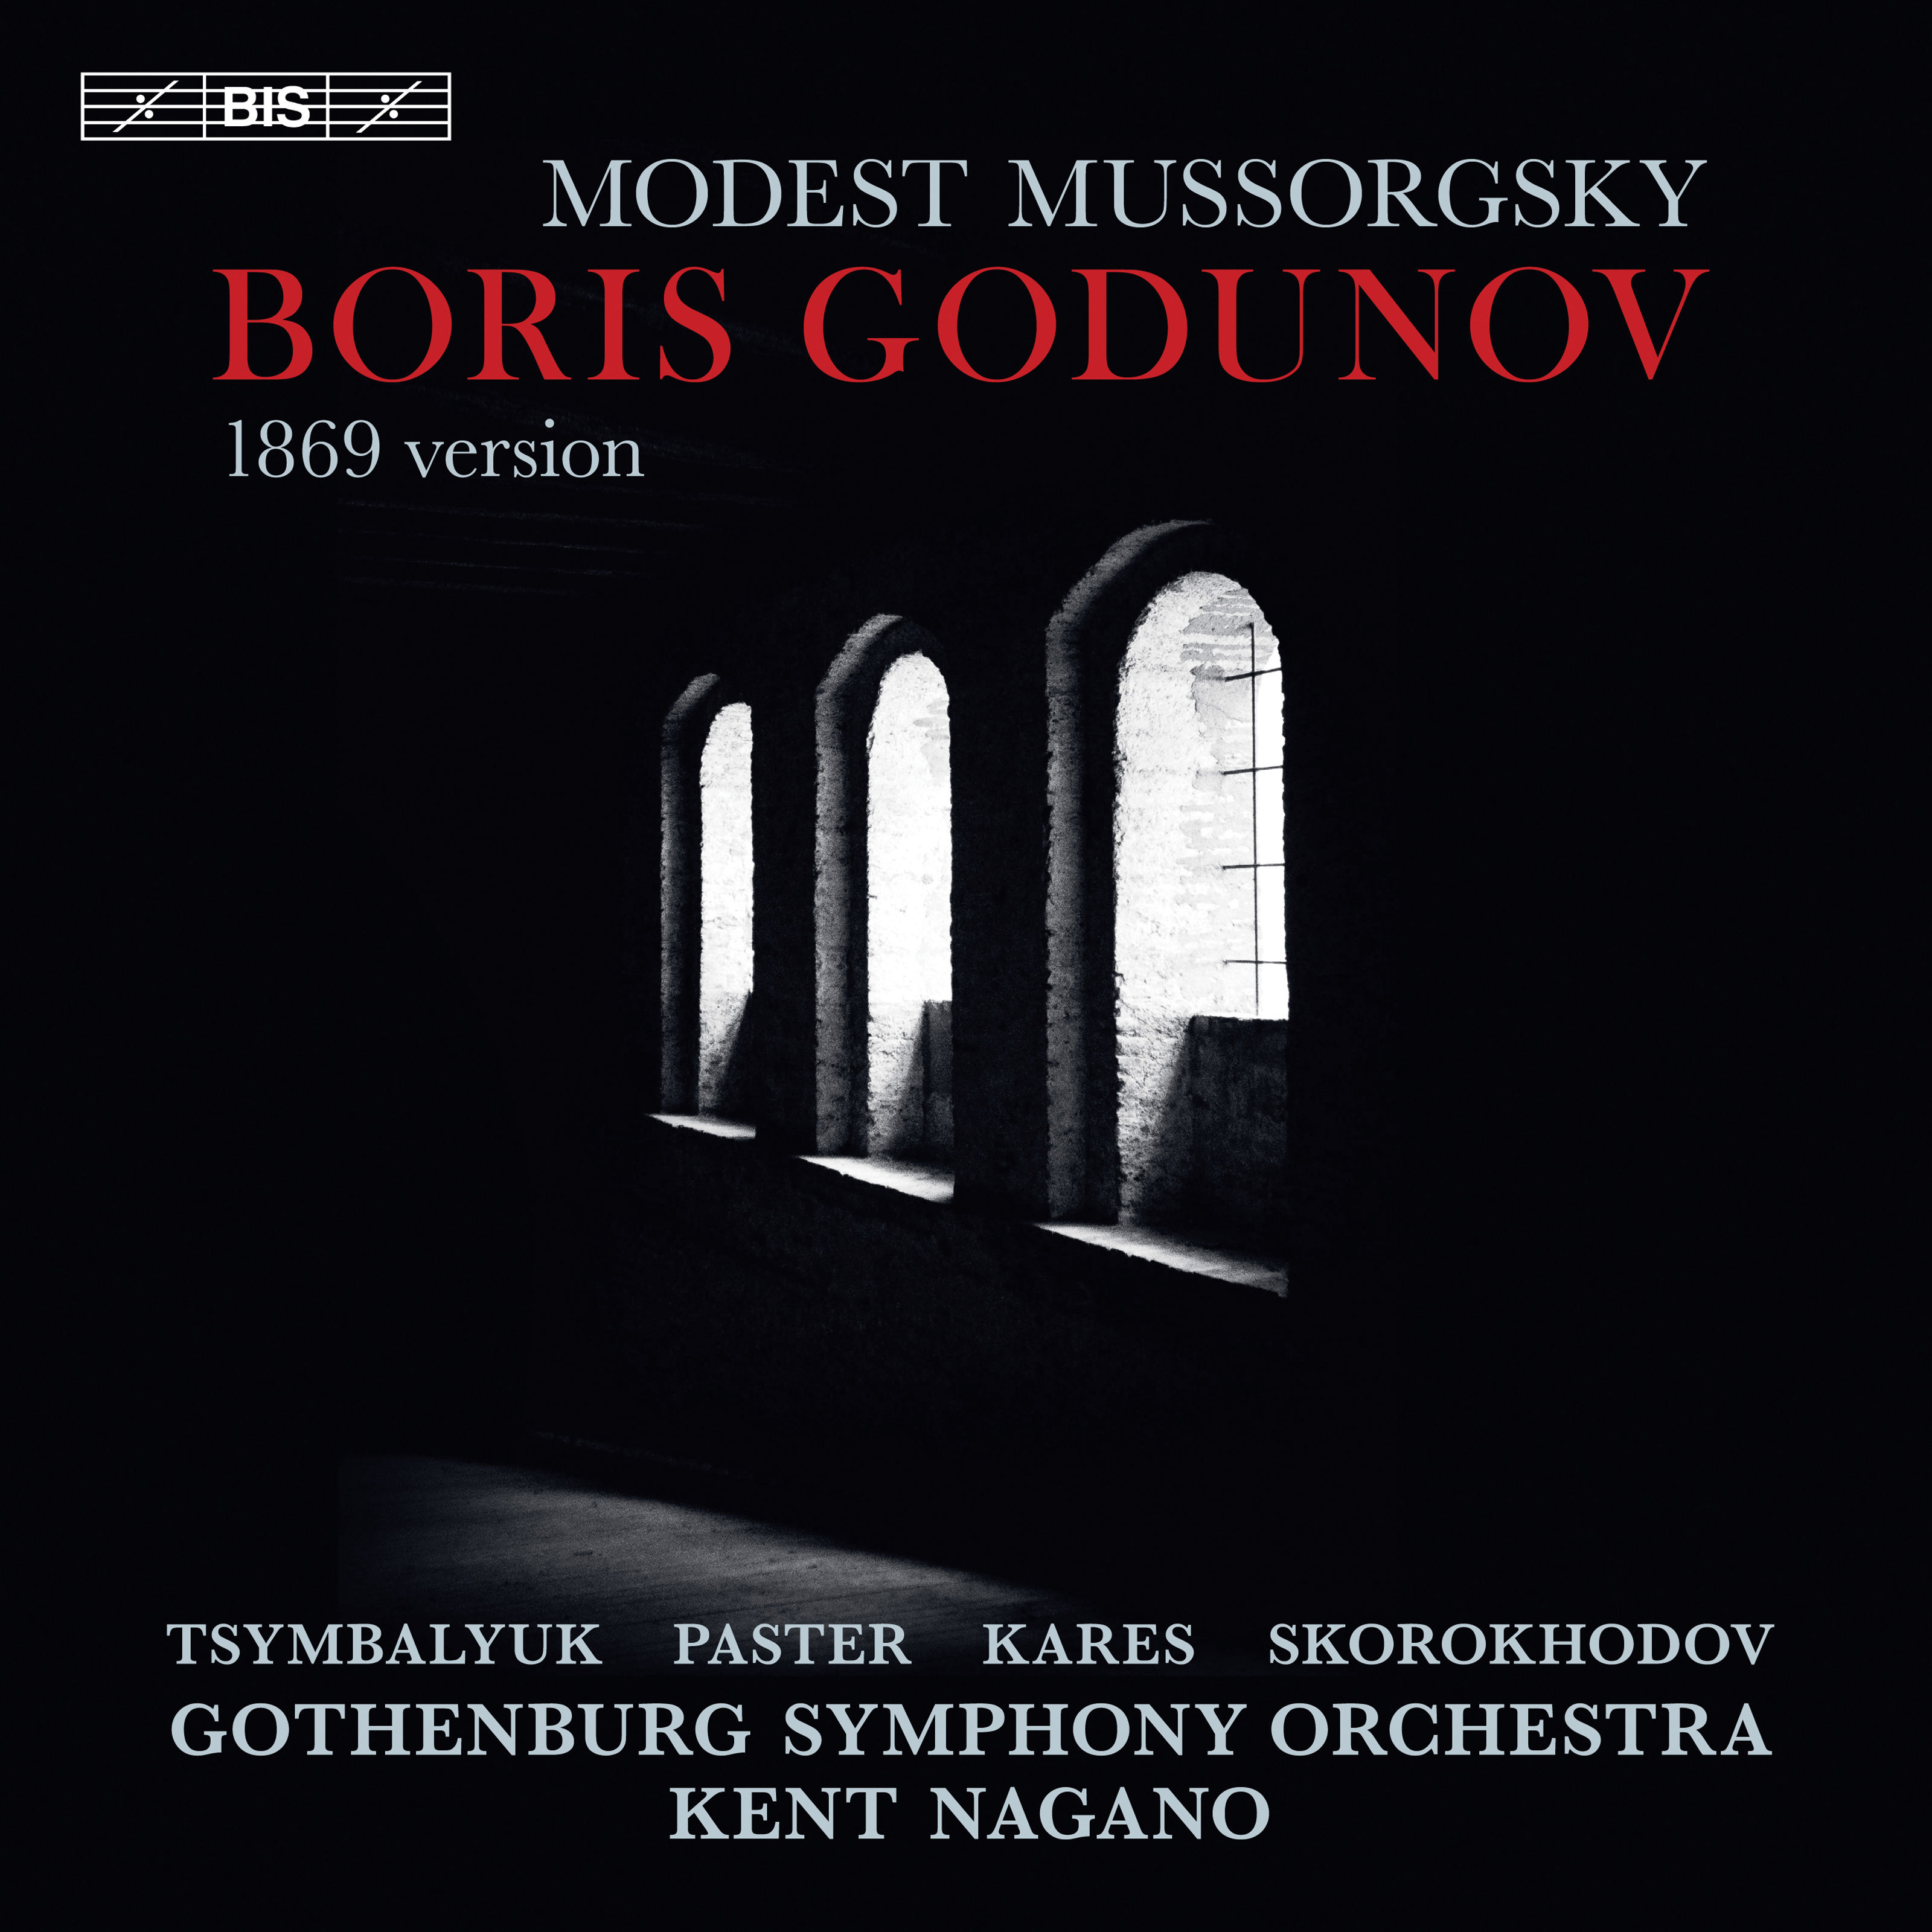 Kent Nagano, Gothenburg Symphony Orchestra - Mussorgsky: Boris Godunov (1869 Version) [Live] (2019) [FLAC 24bit/96kHz]